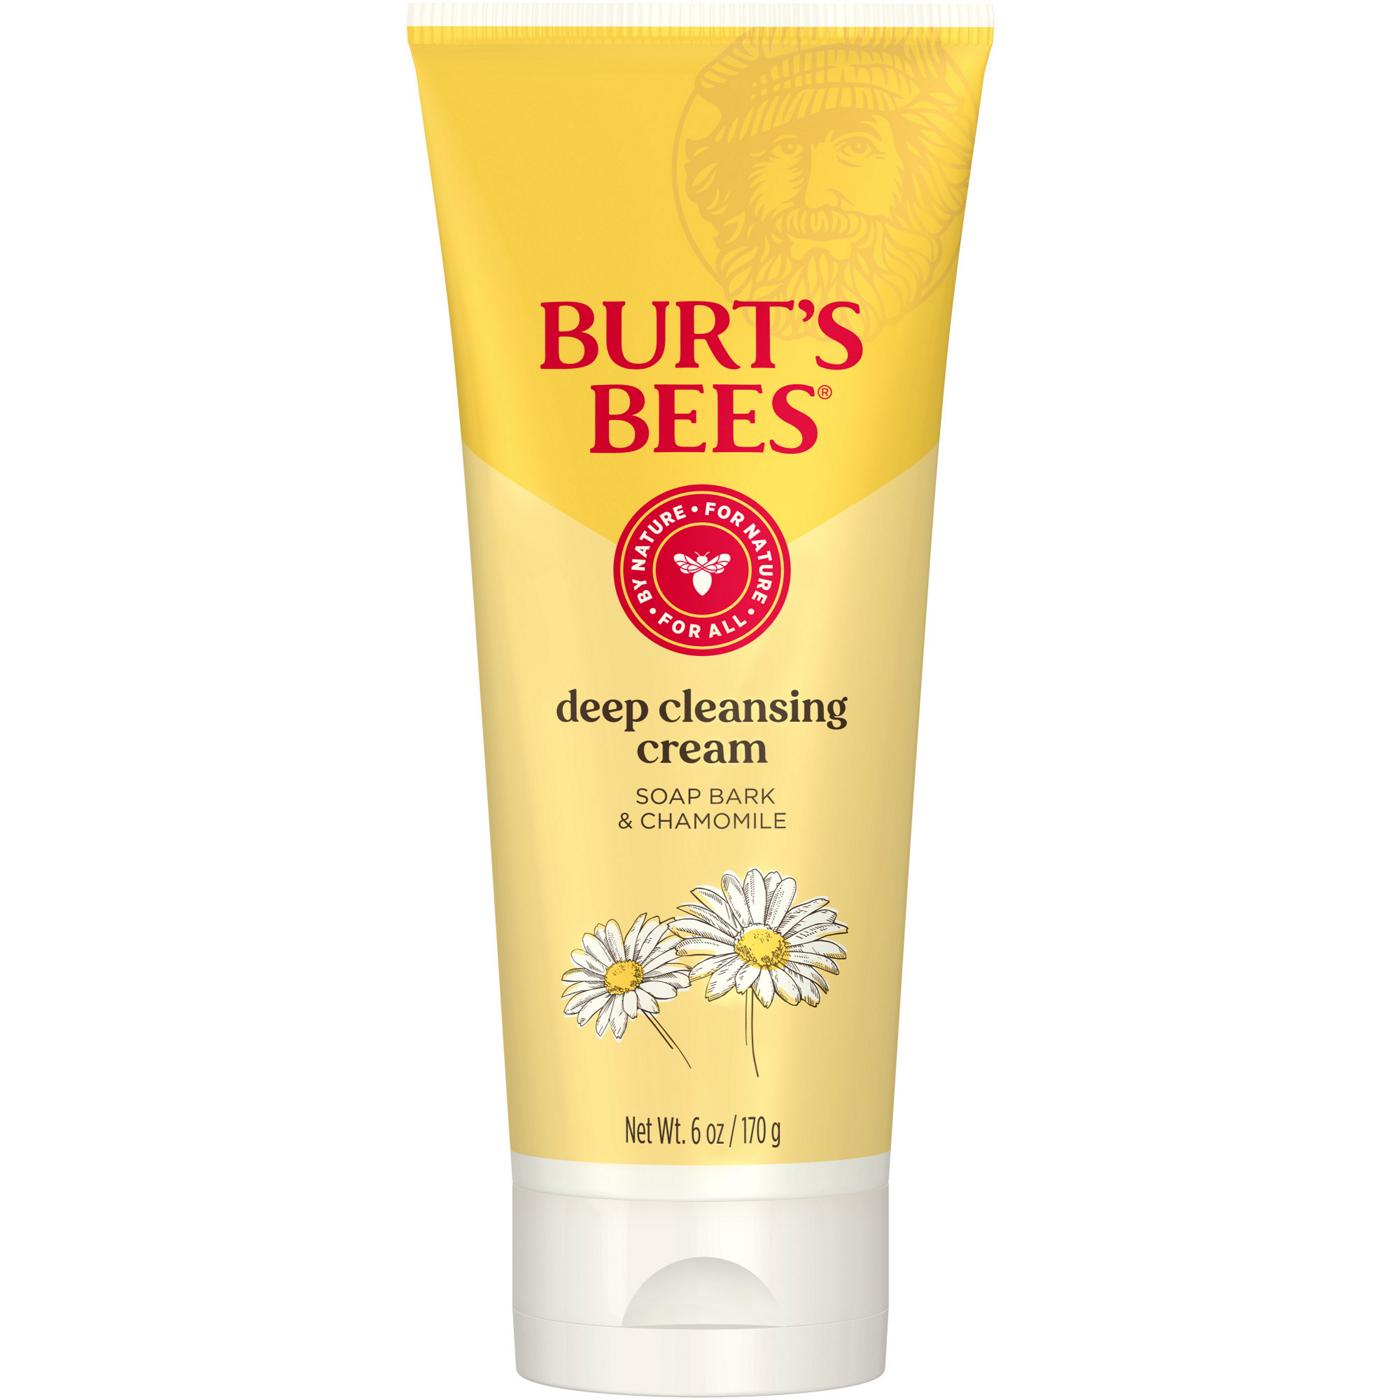 Burt's Bees Deep Cleansing Cream - Soap Bark & Chamomile; image 1 of 13